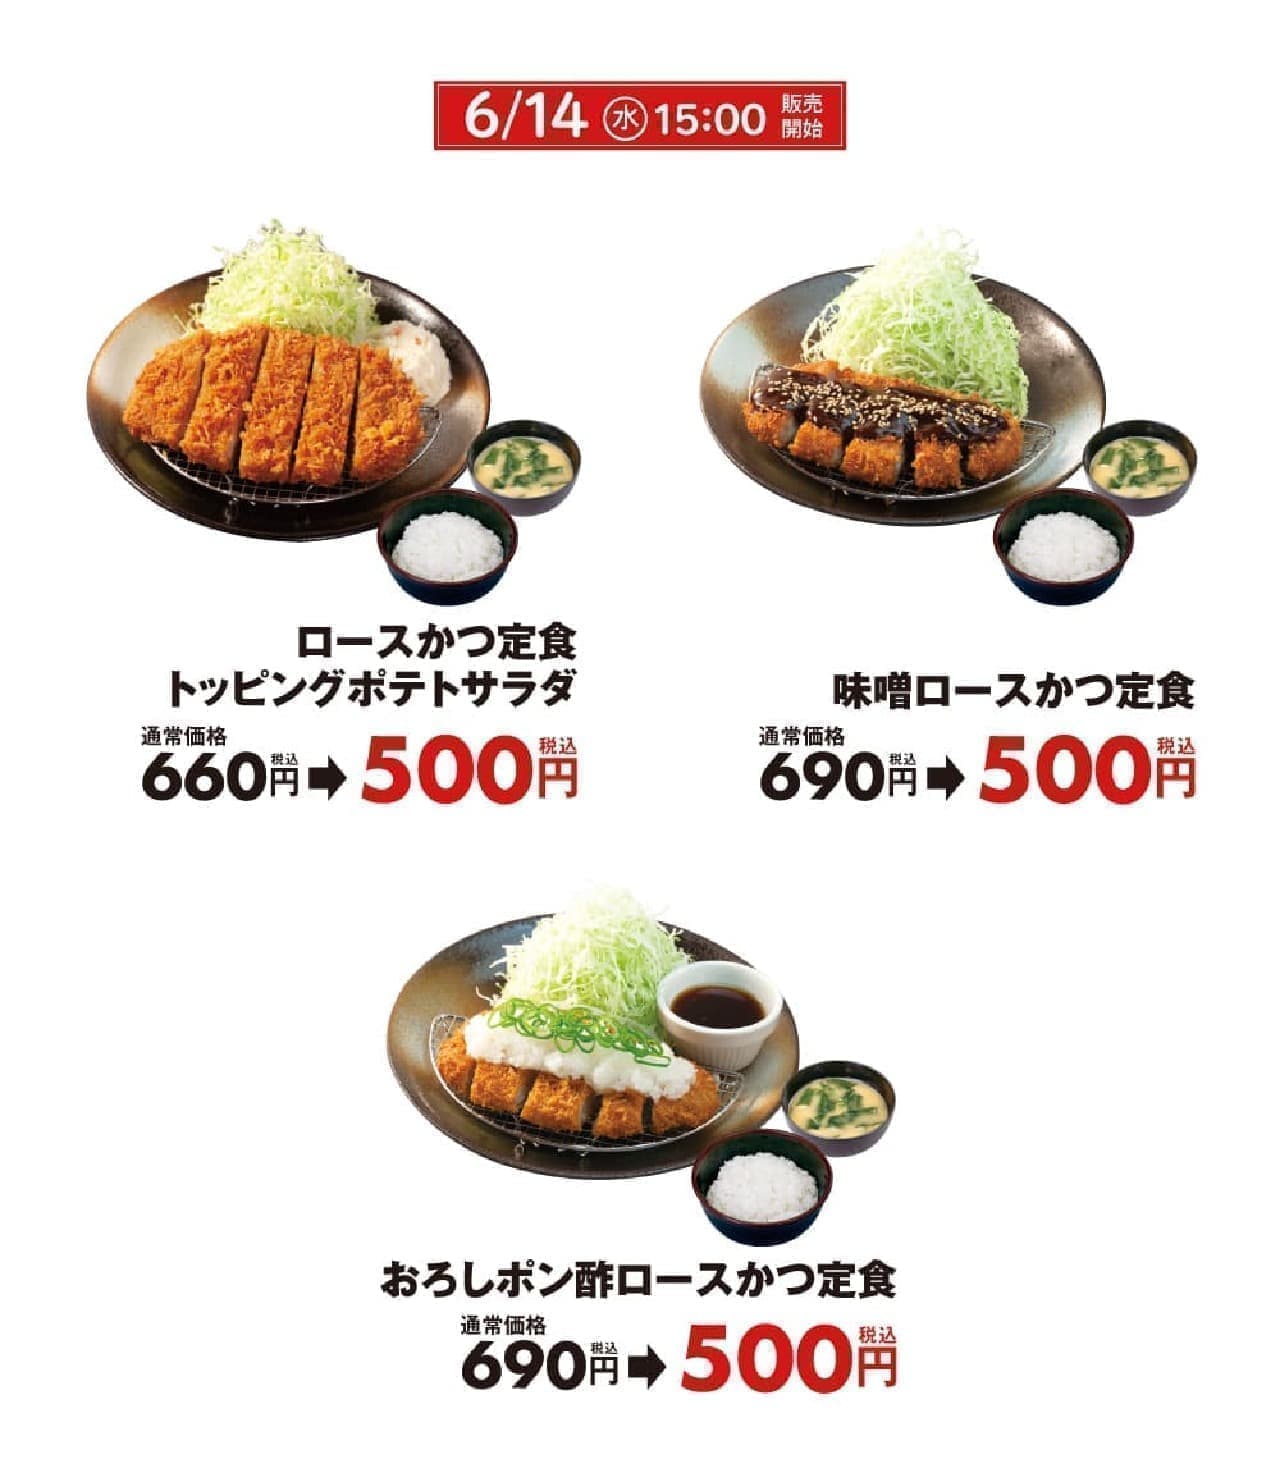 Matsunoya "Roast pork cutlet set meal 500 yen SALE